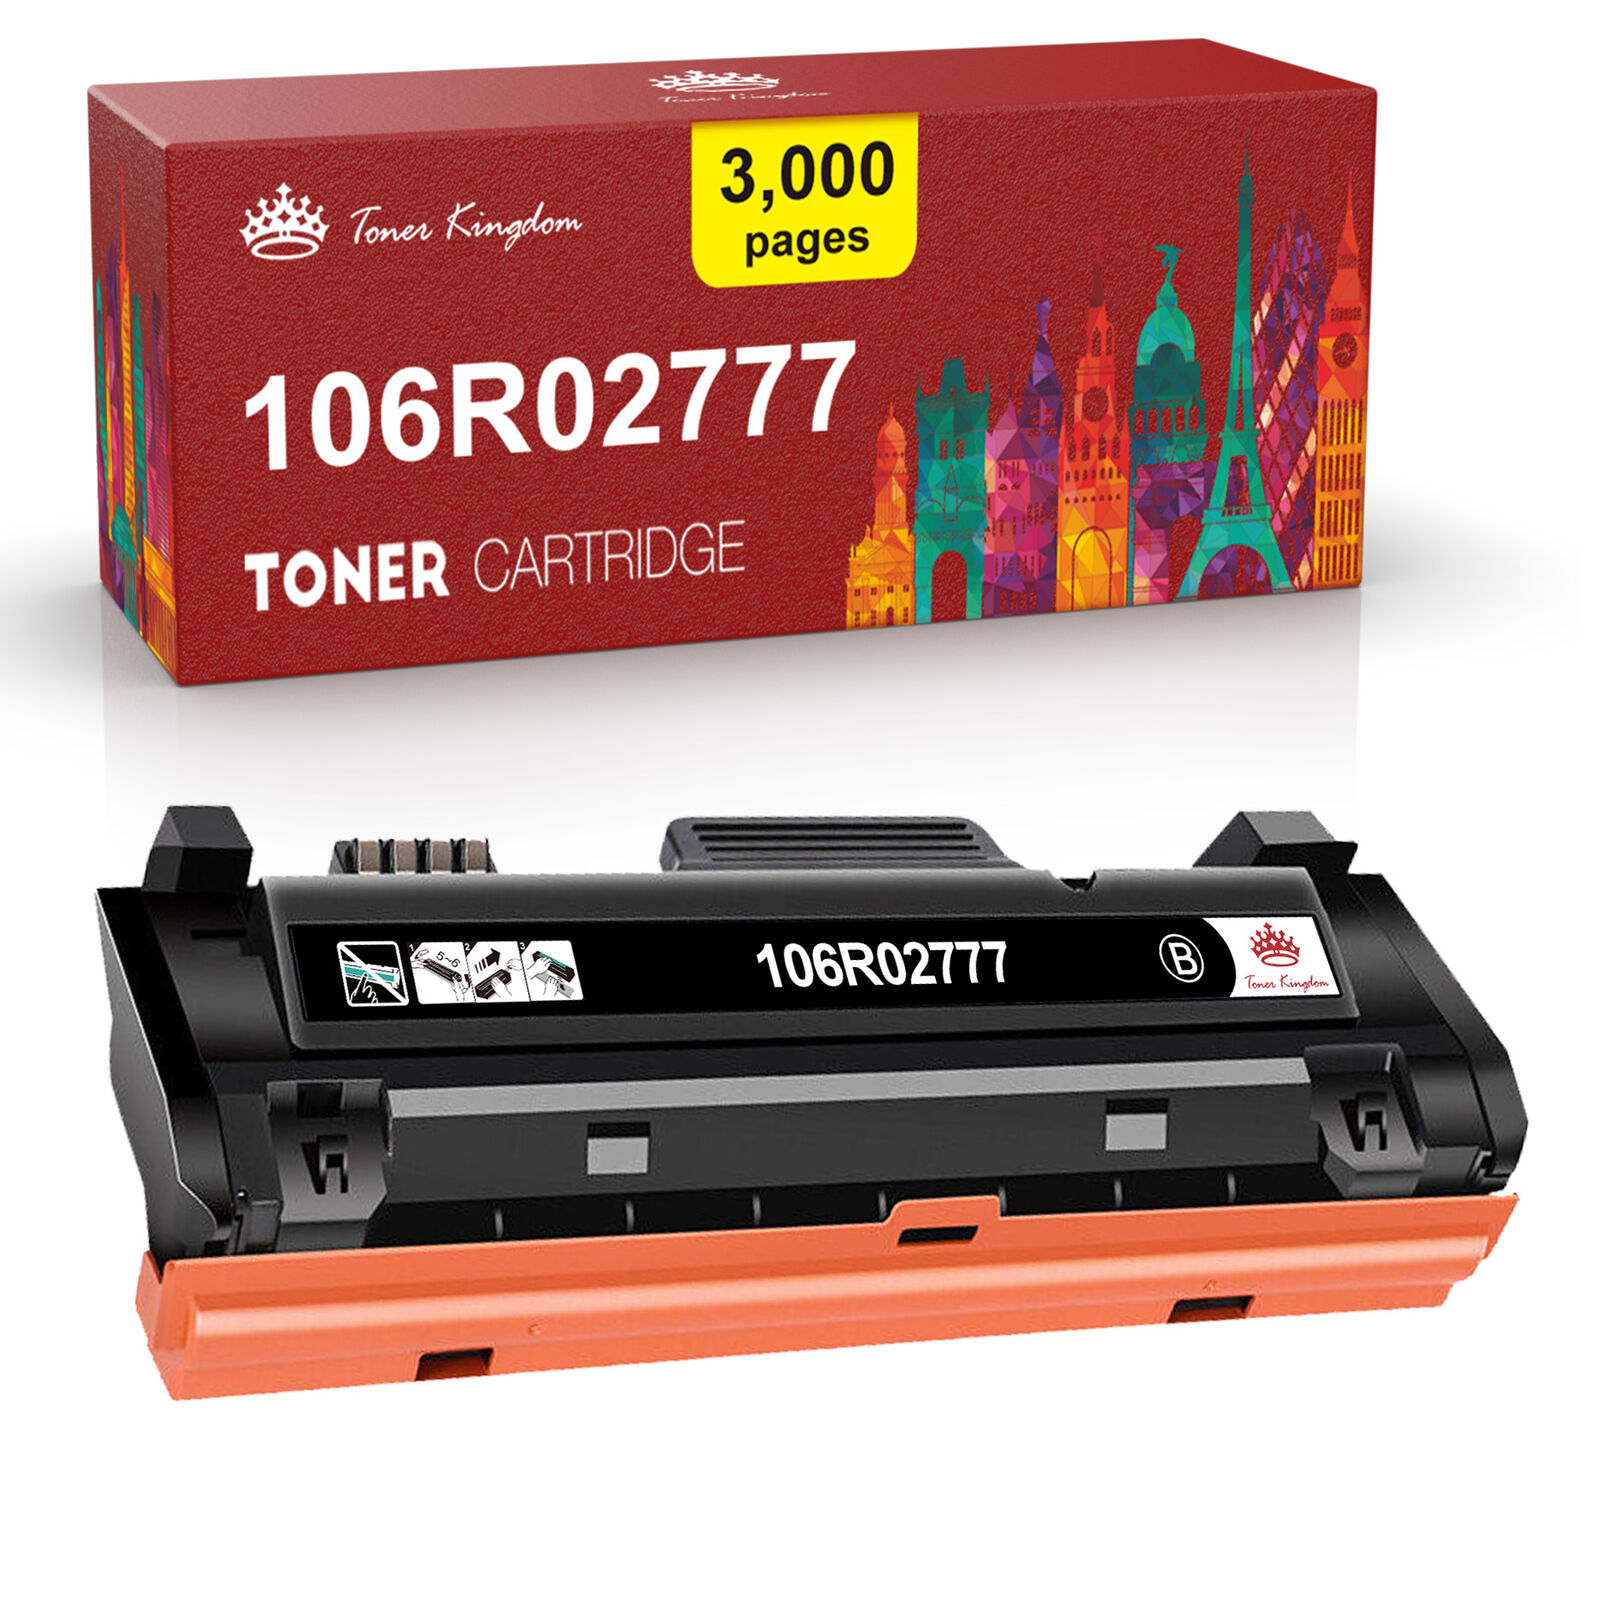 Black Toner Cartridge for XEROX 3215 106R02777 Phaser 3260DI WorkCentre 3215 LOT